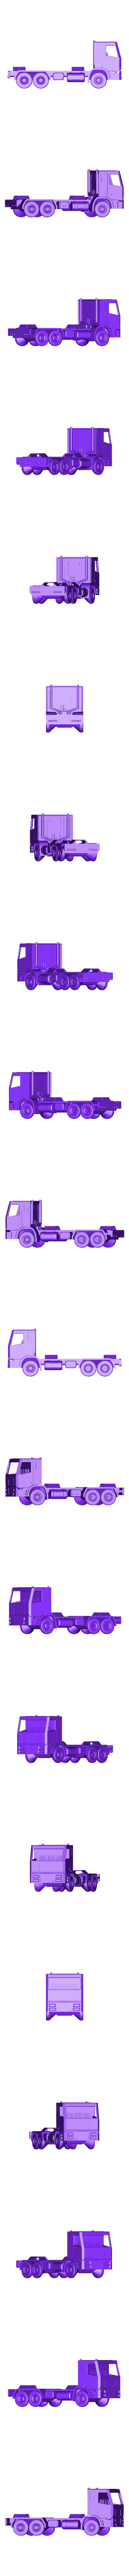 Truck_Base.stl Download STL file Print-in-Place Wood Transport Module • 3D print object, budinavit